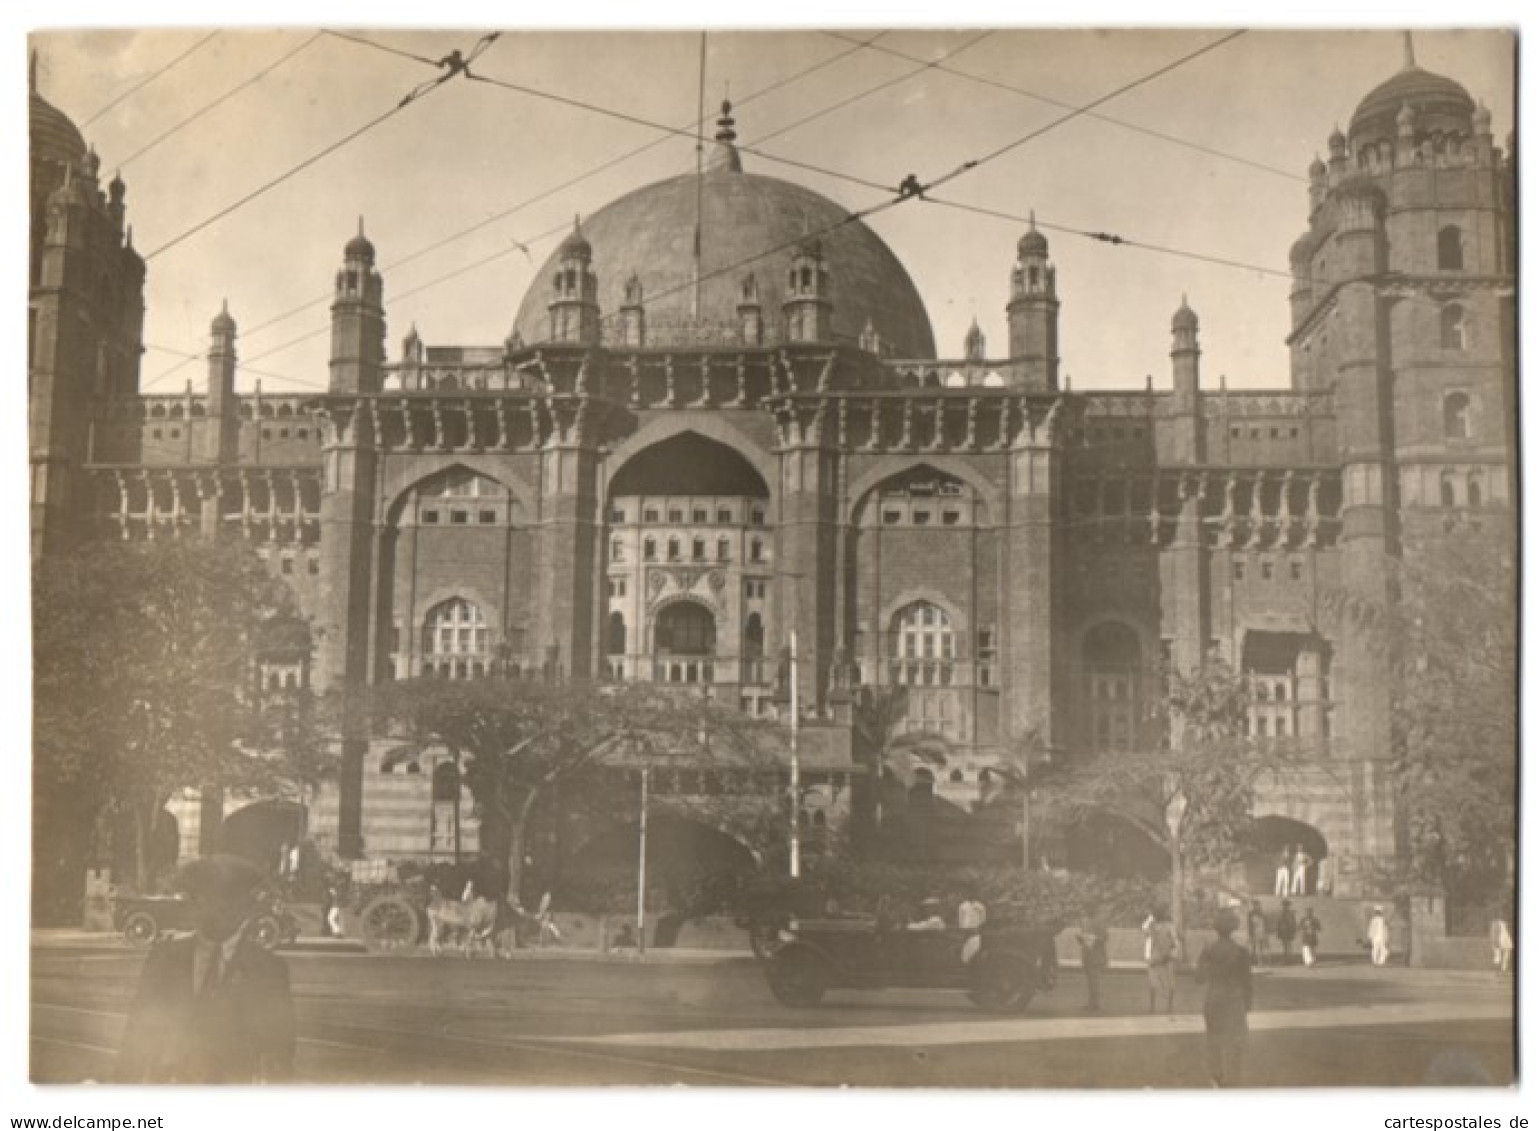 Fotografie Unbekannter Fotograf, Ansicht Bombay / Mumbai, Museum Prince Of Wales Um 1928  - Lieux